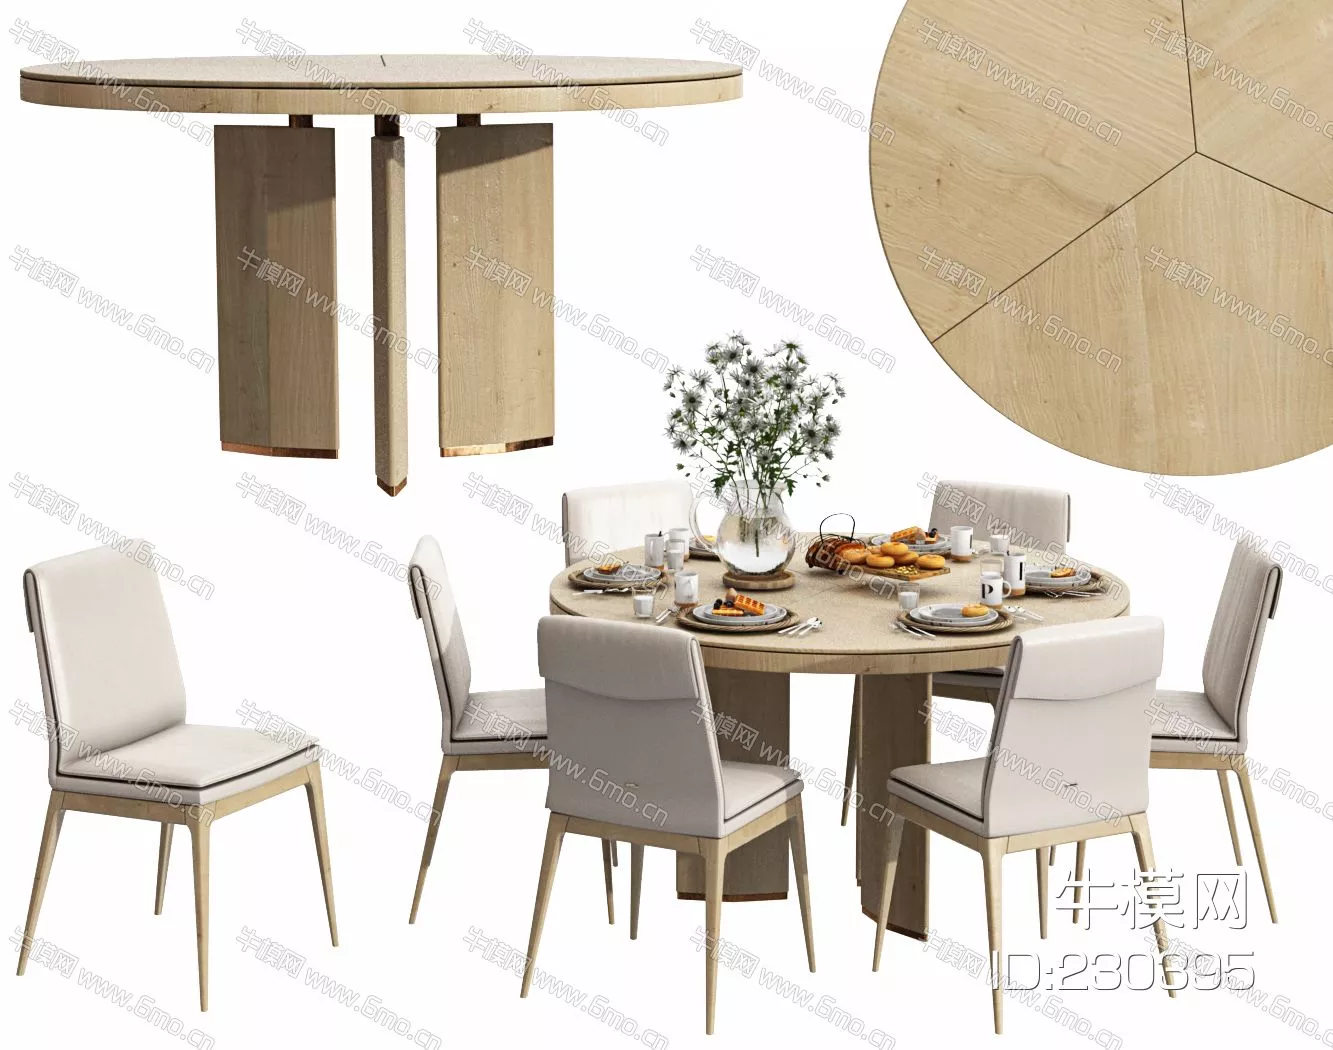 MODERN DINING TABLE SET - SKETCHUP 3D MODEL - VRAY - 230395